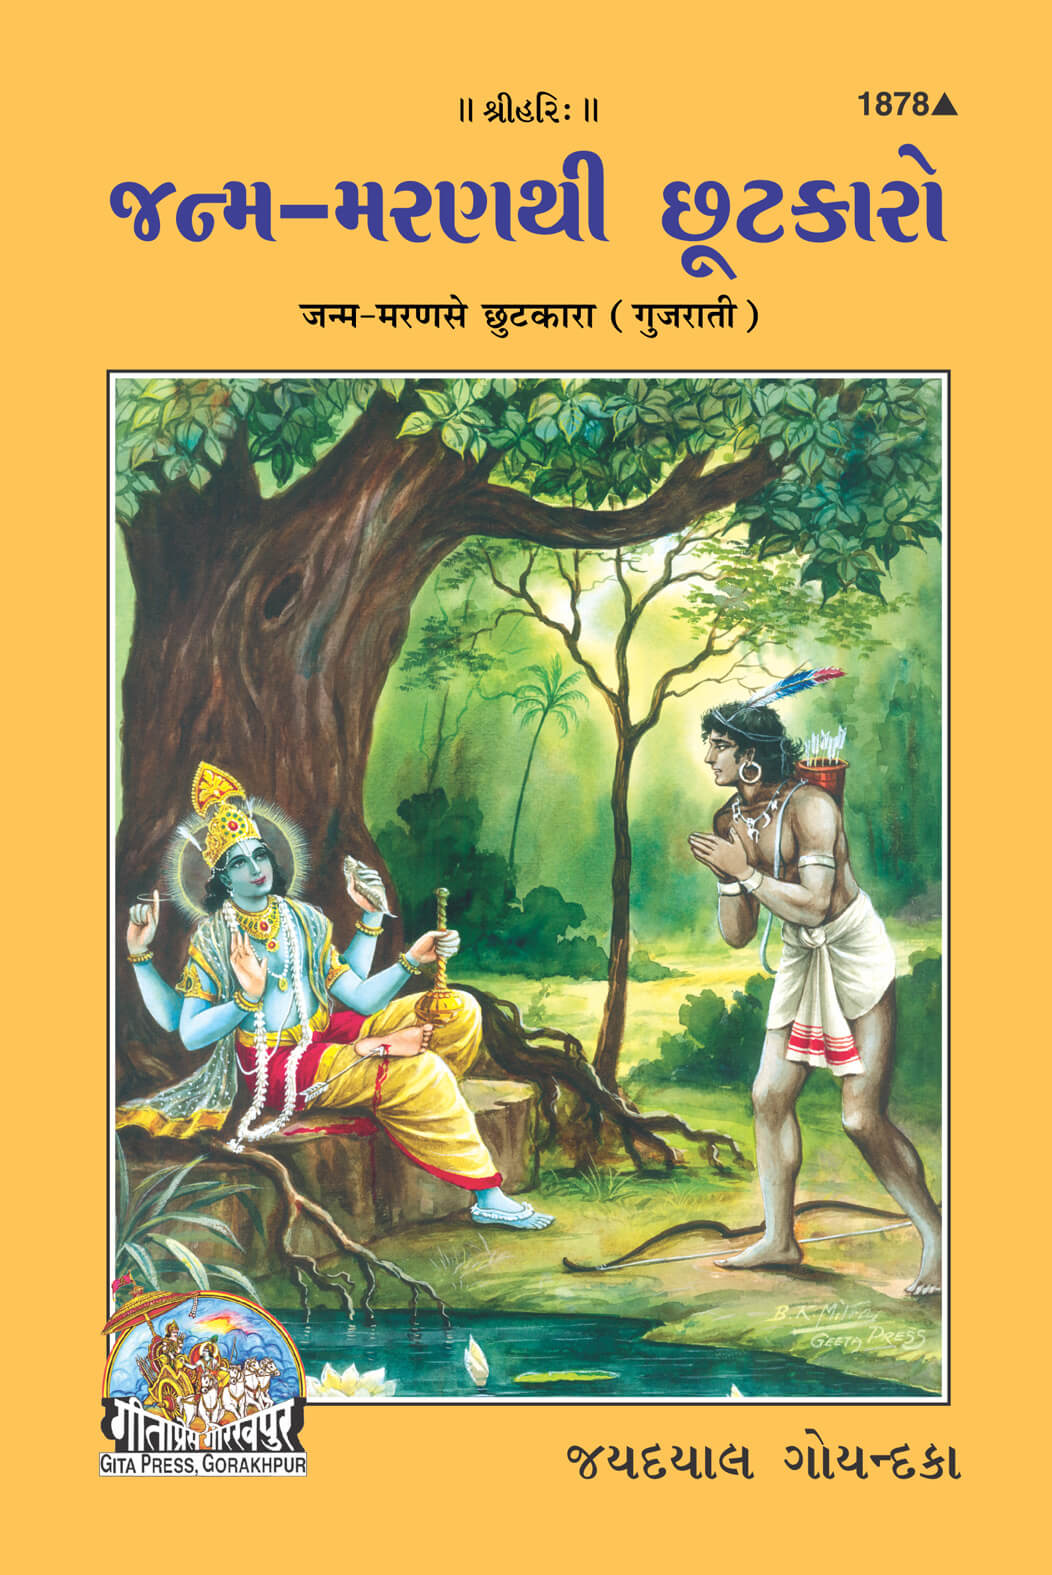 SANATAN  Janam Maran se Chutkara (Gujarati) by Gita Press